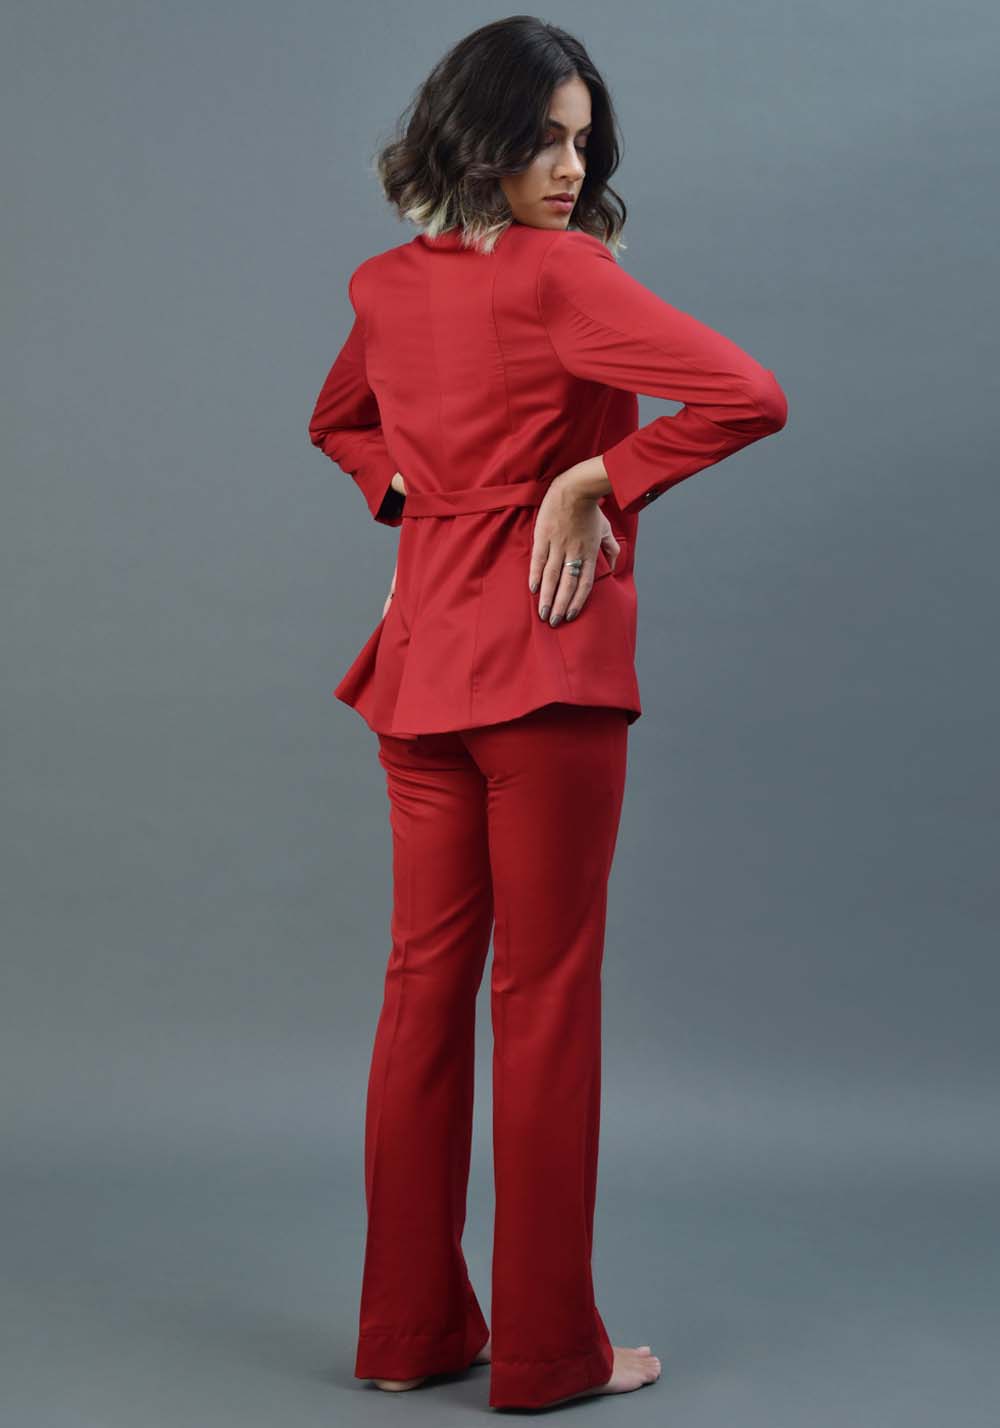 Women's Red Tie-up business suit